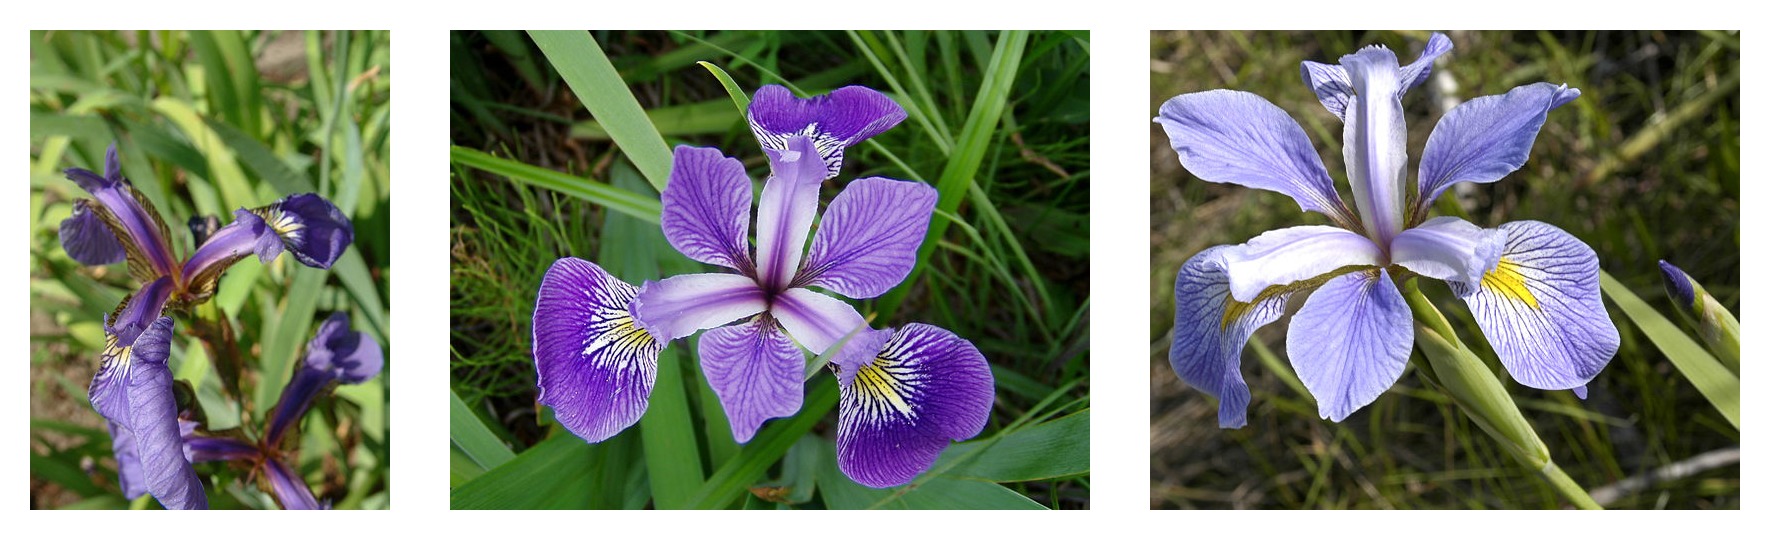 Geometria dei petali confrontata per tre specie di iris: Iris setosa, Iris virginica e Iris versicolor